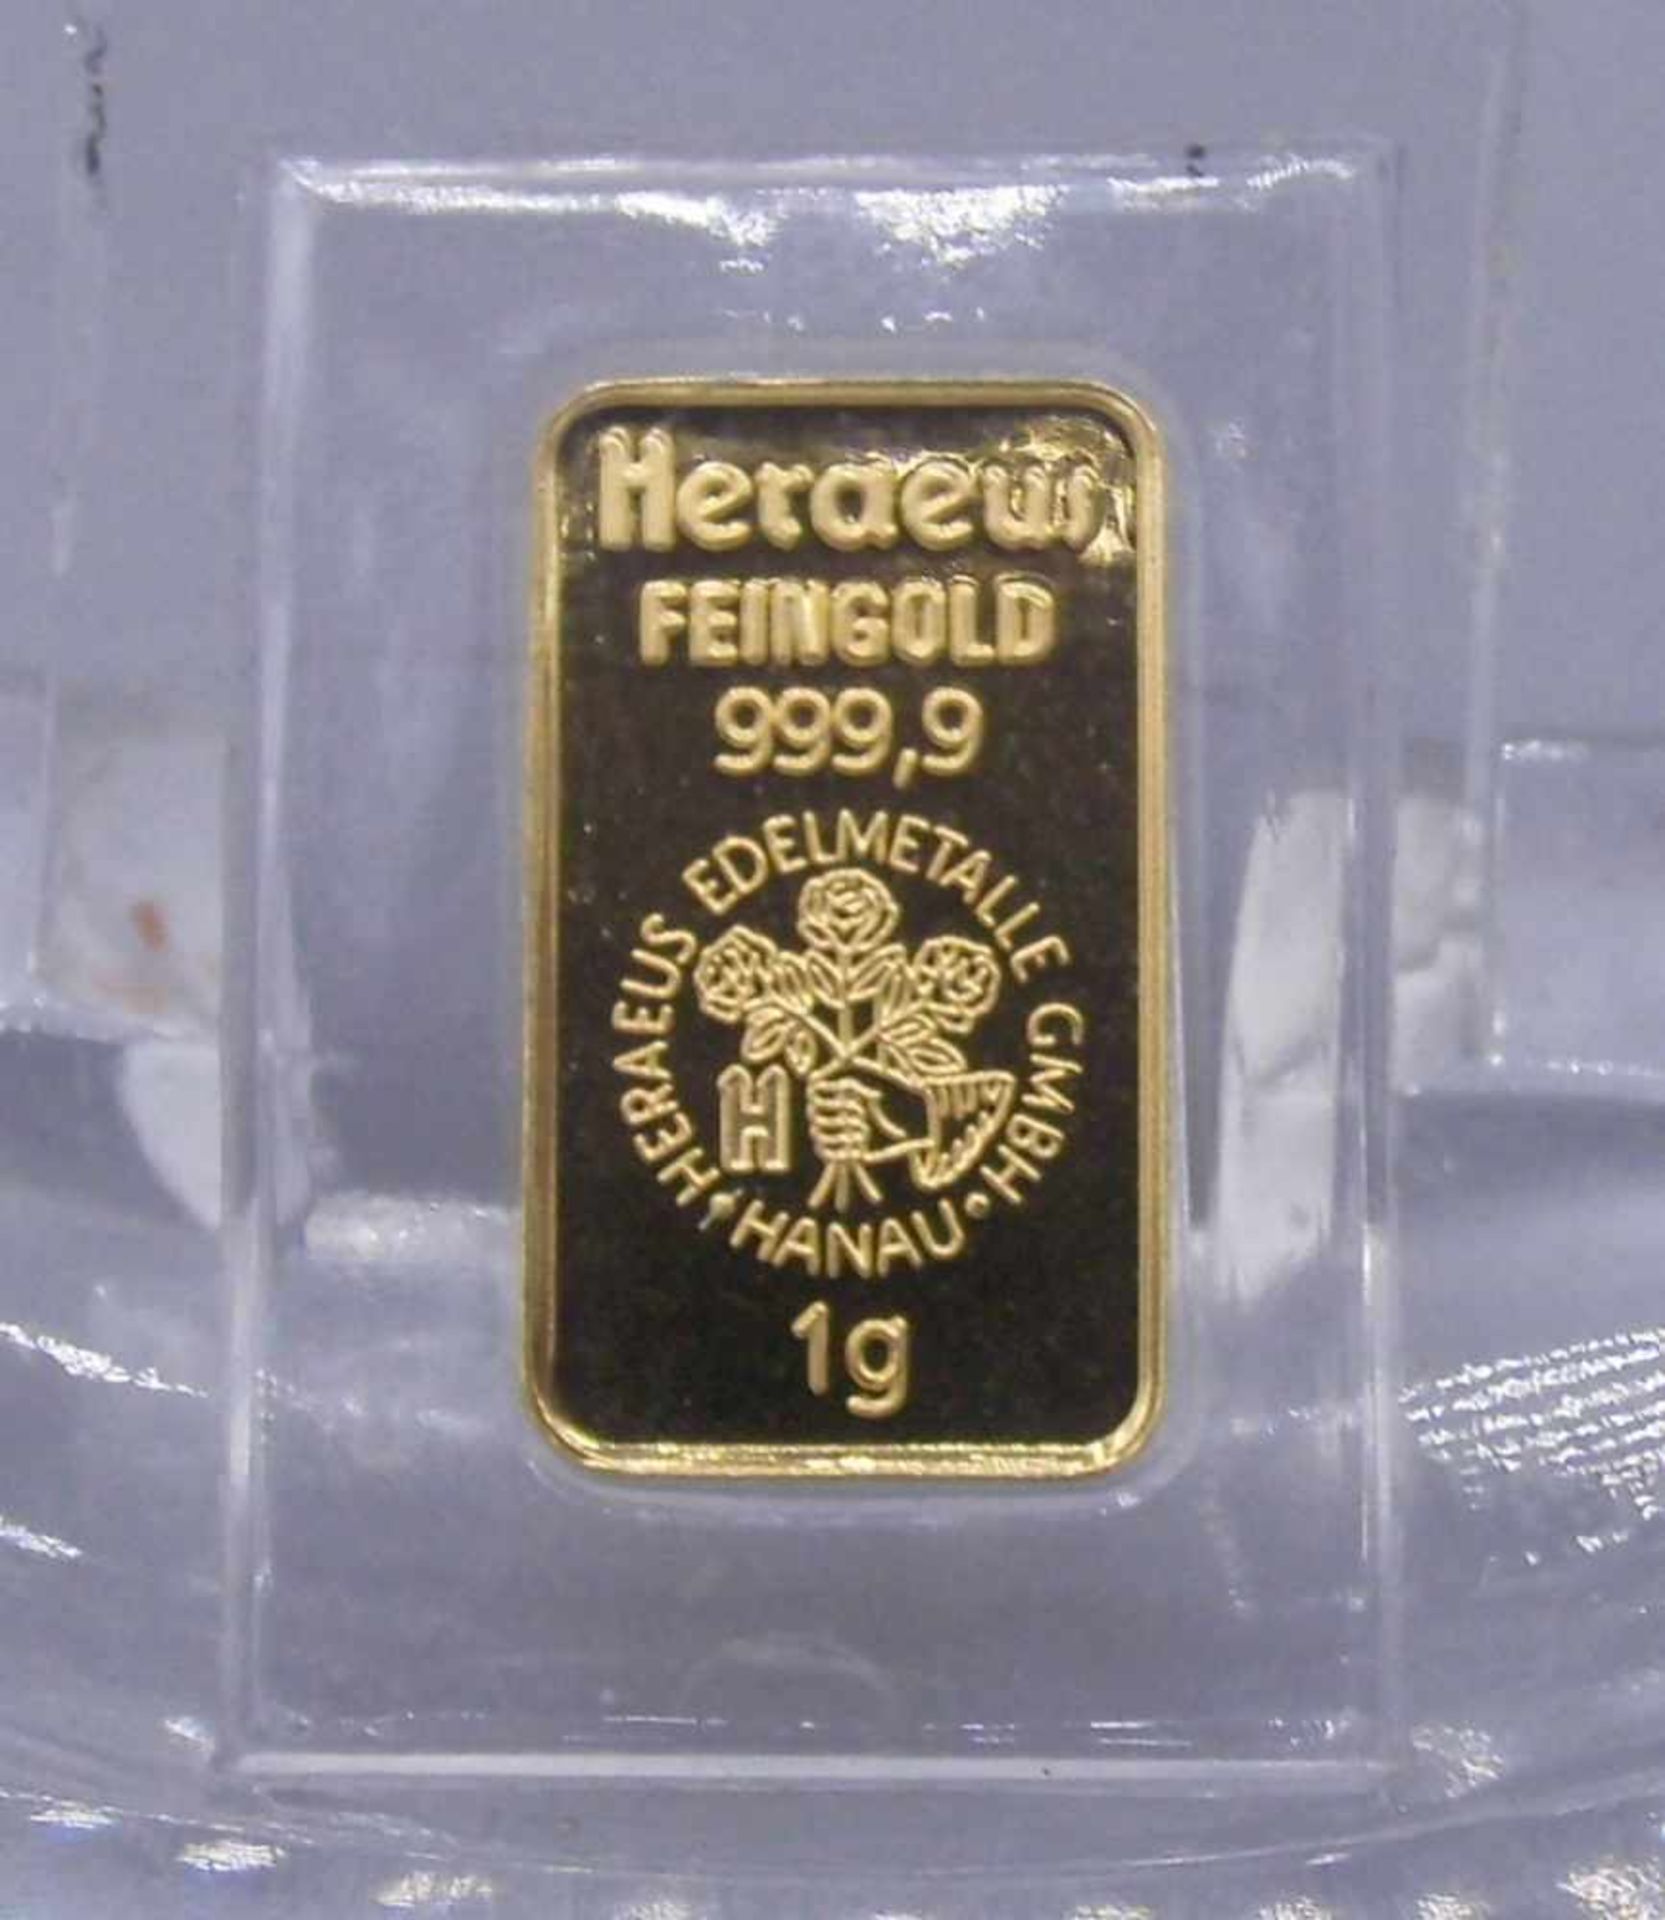 GOLDBARREN "HERAEUS", 999,9er Feingold (1 g). Gravur vorderseitig: Heraeus Feingold 999,99, darunter